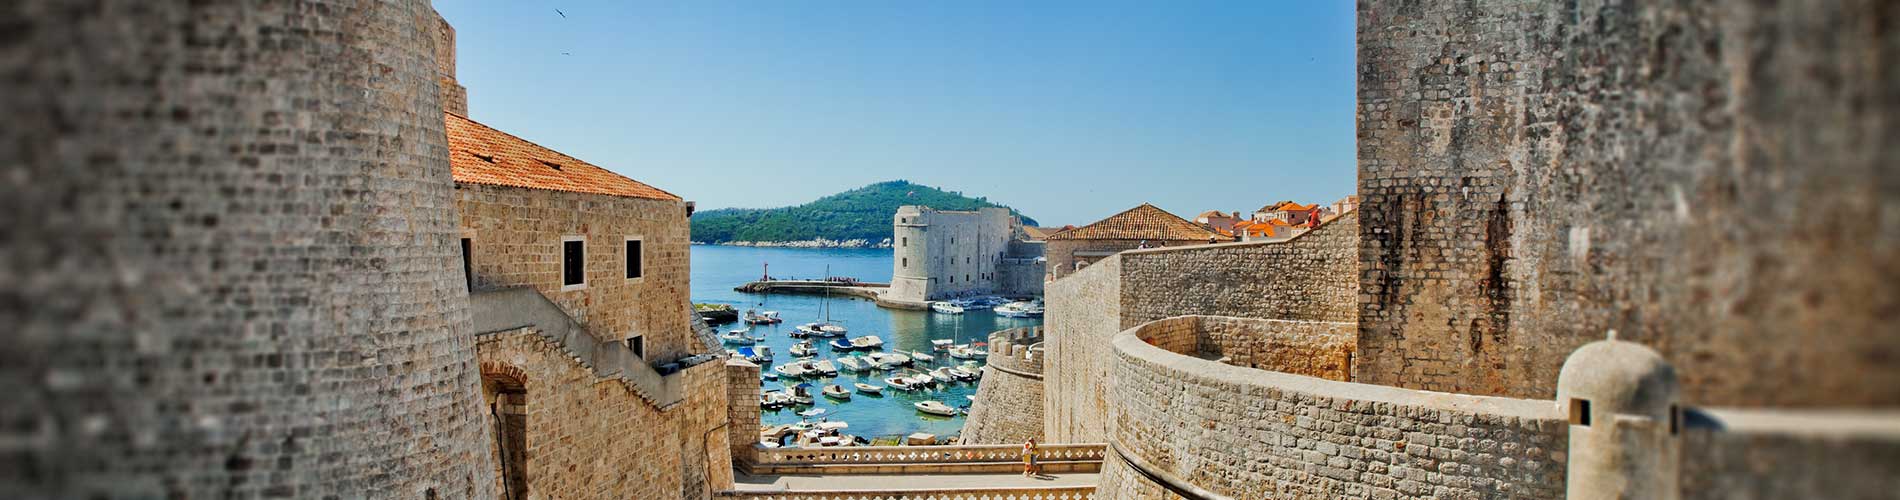 Dubrovnik old city Croatia fortress.jpg